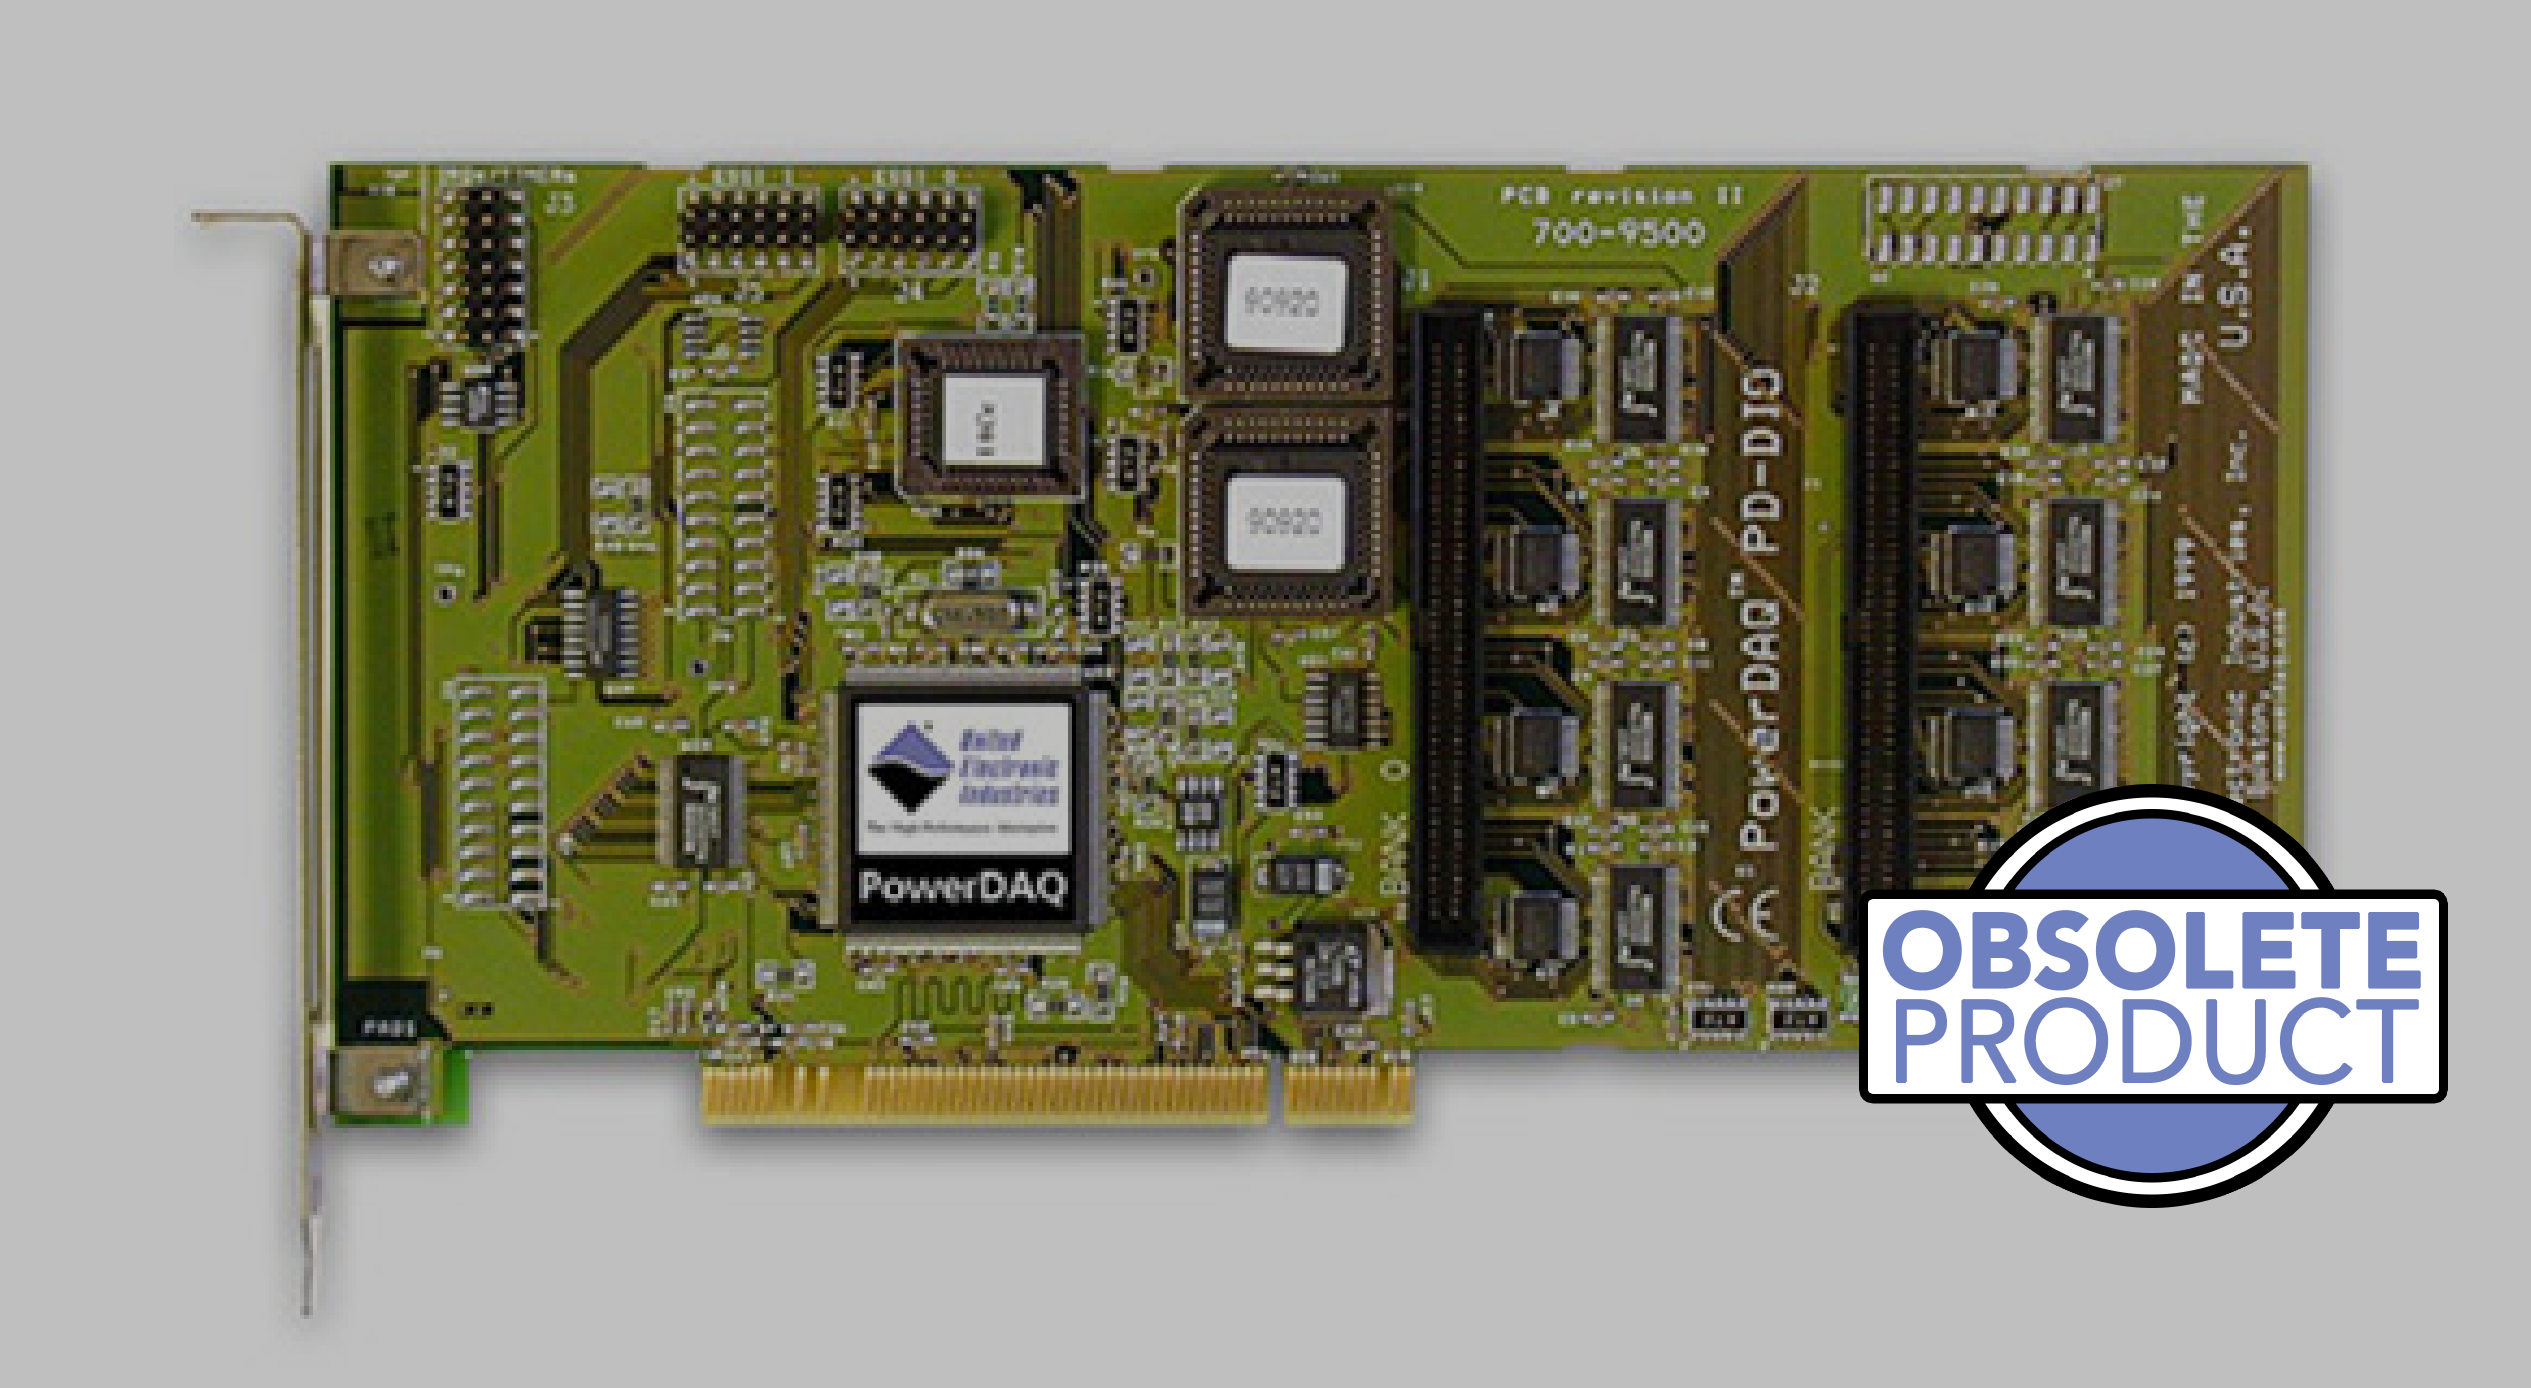 128-channel, 16-bit PCI digital I/O board